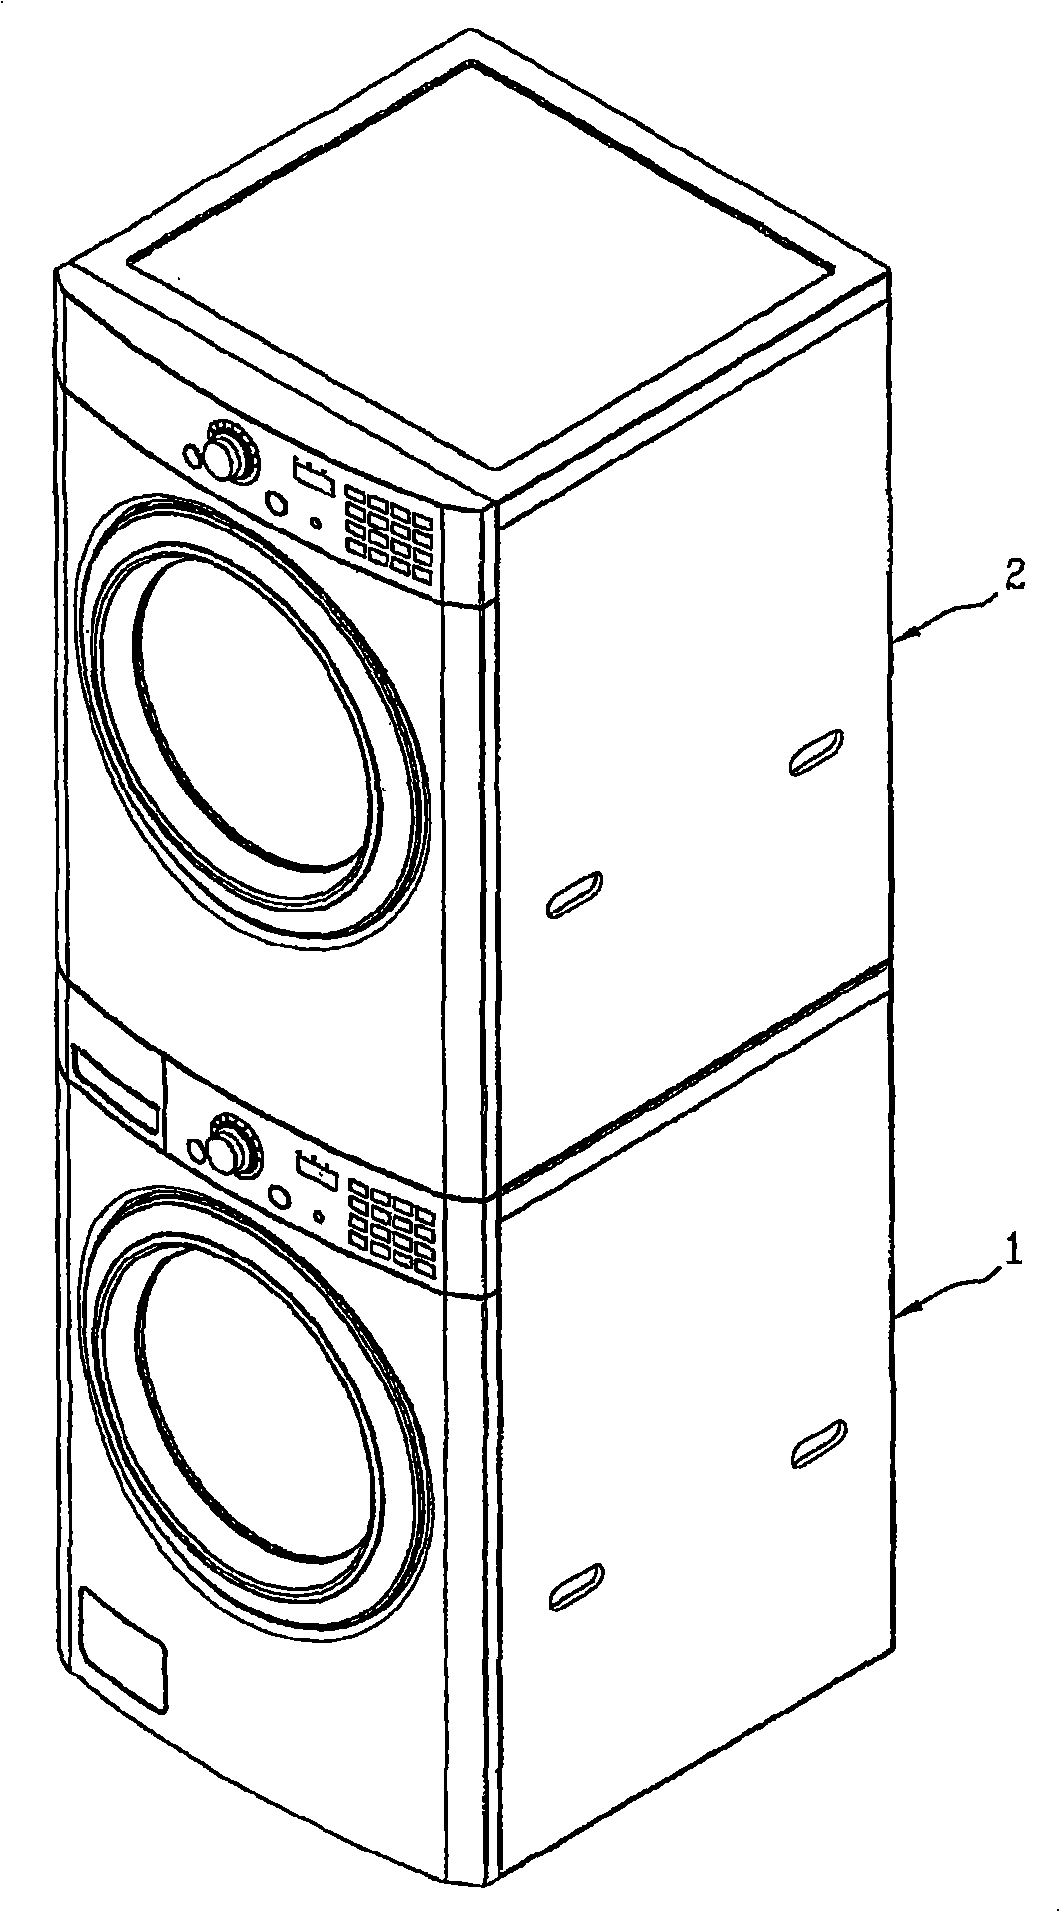 Laundry device